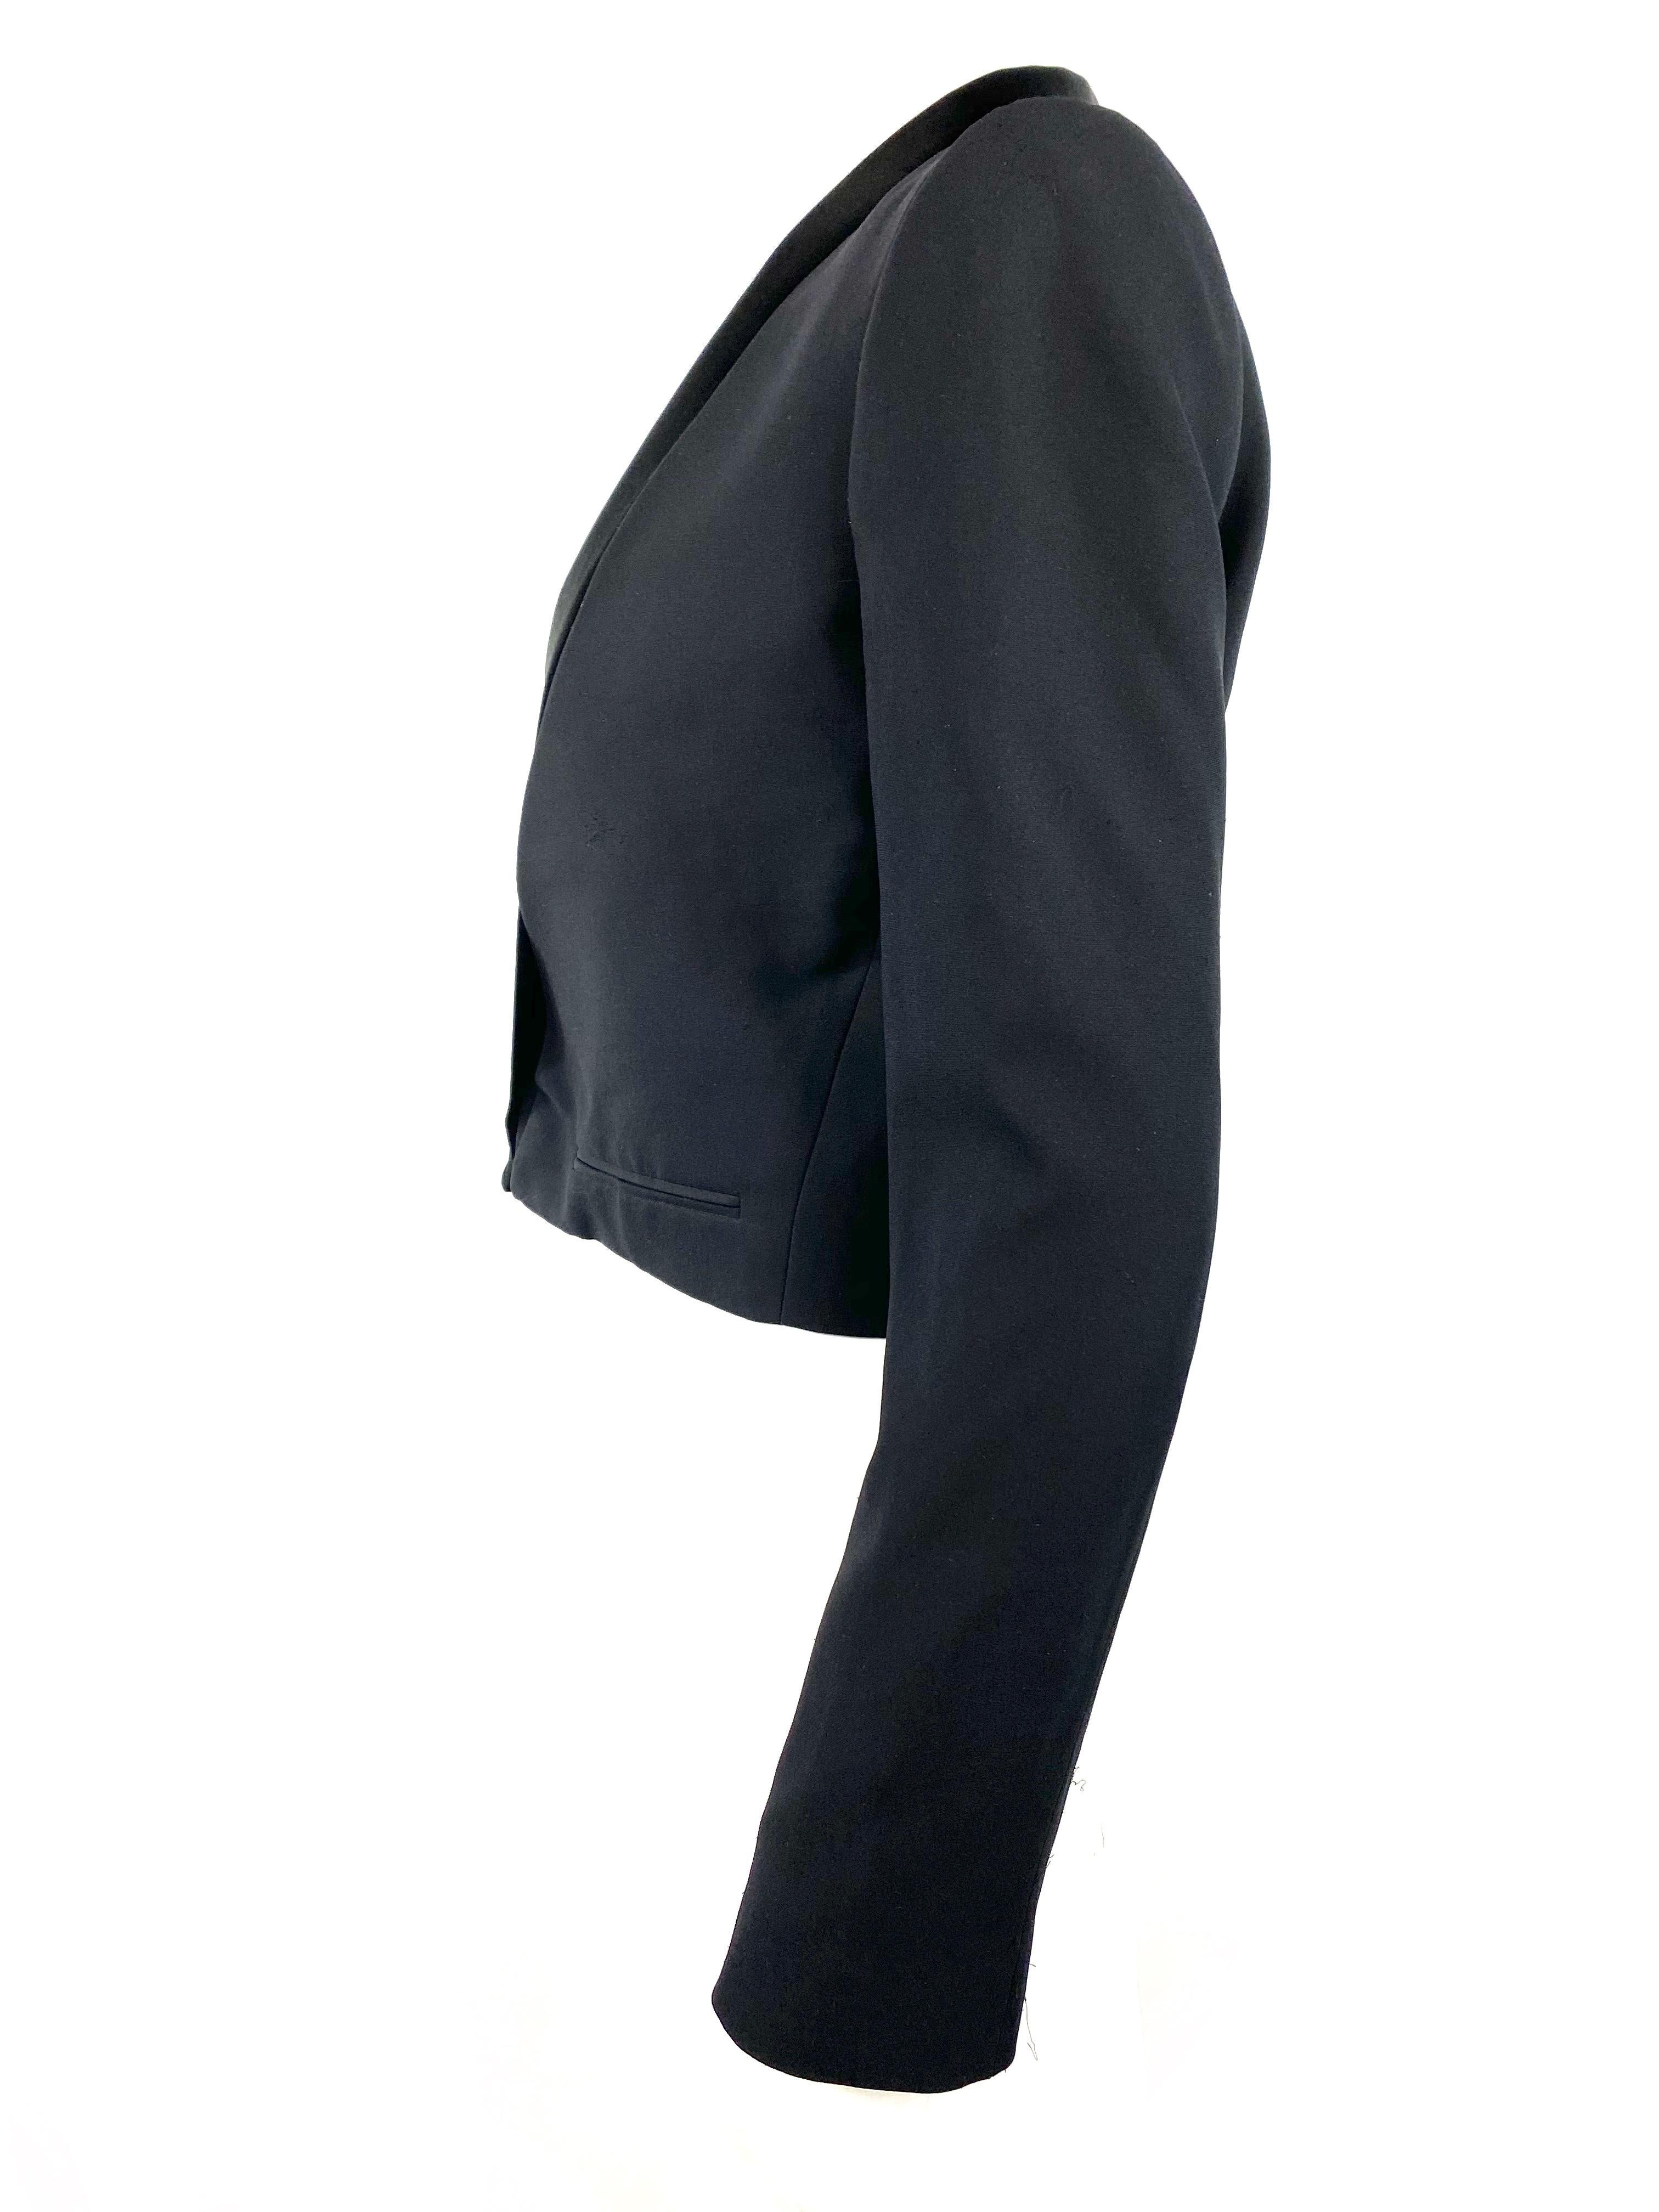 Haider Achermann Black Silk Tuxedo Blazer and Wool Pants Suit Set  For Sale 1